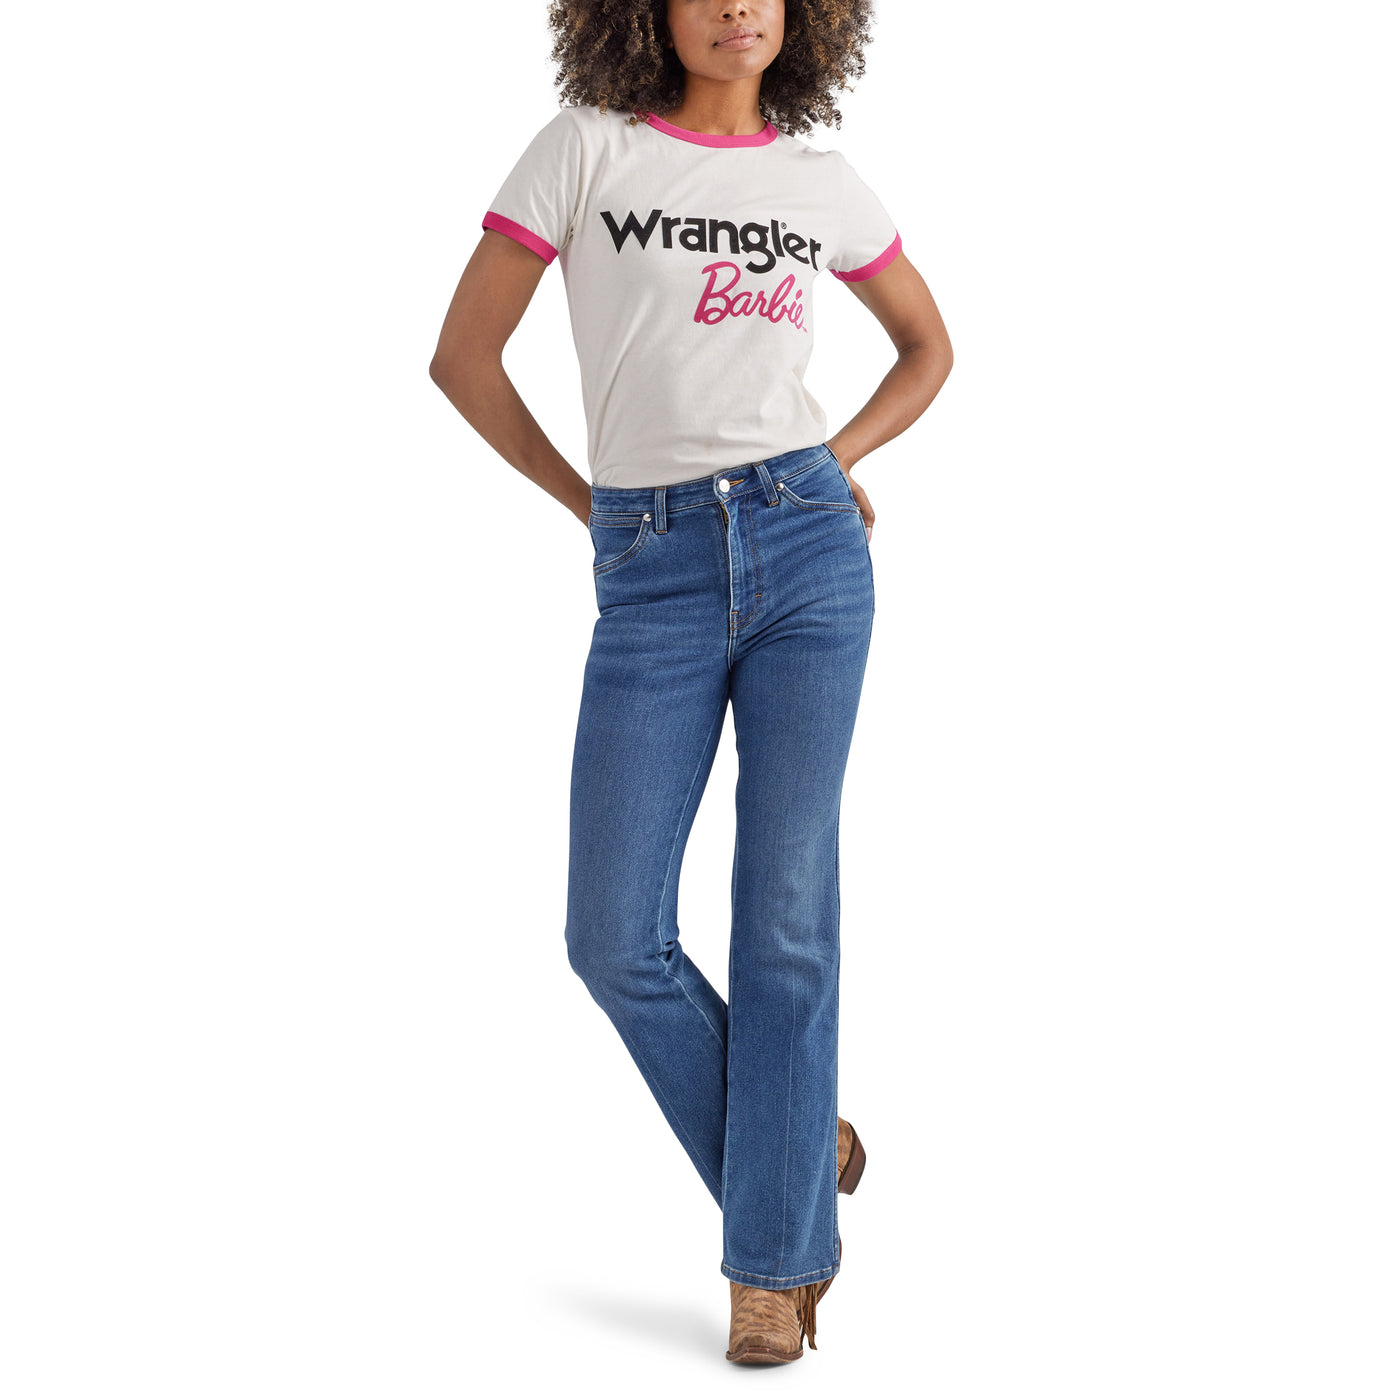 Wrangler Womens Blue Jeans Lady Ringer Tee Worn White Size M